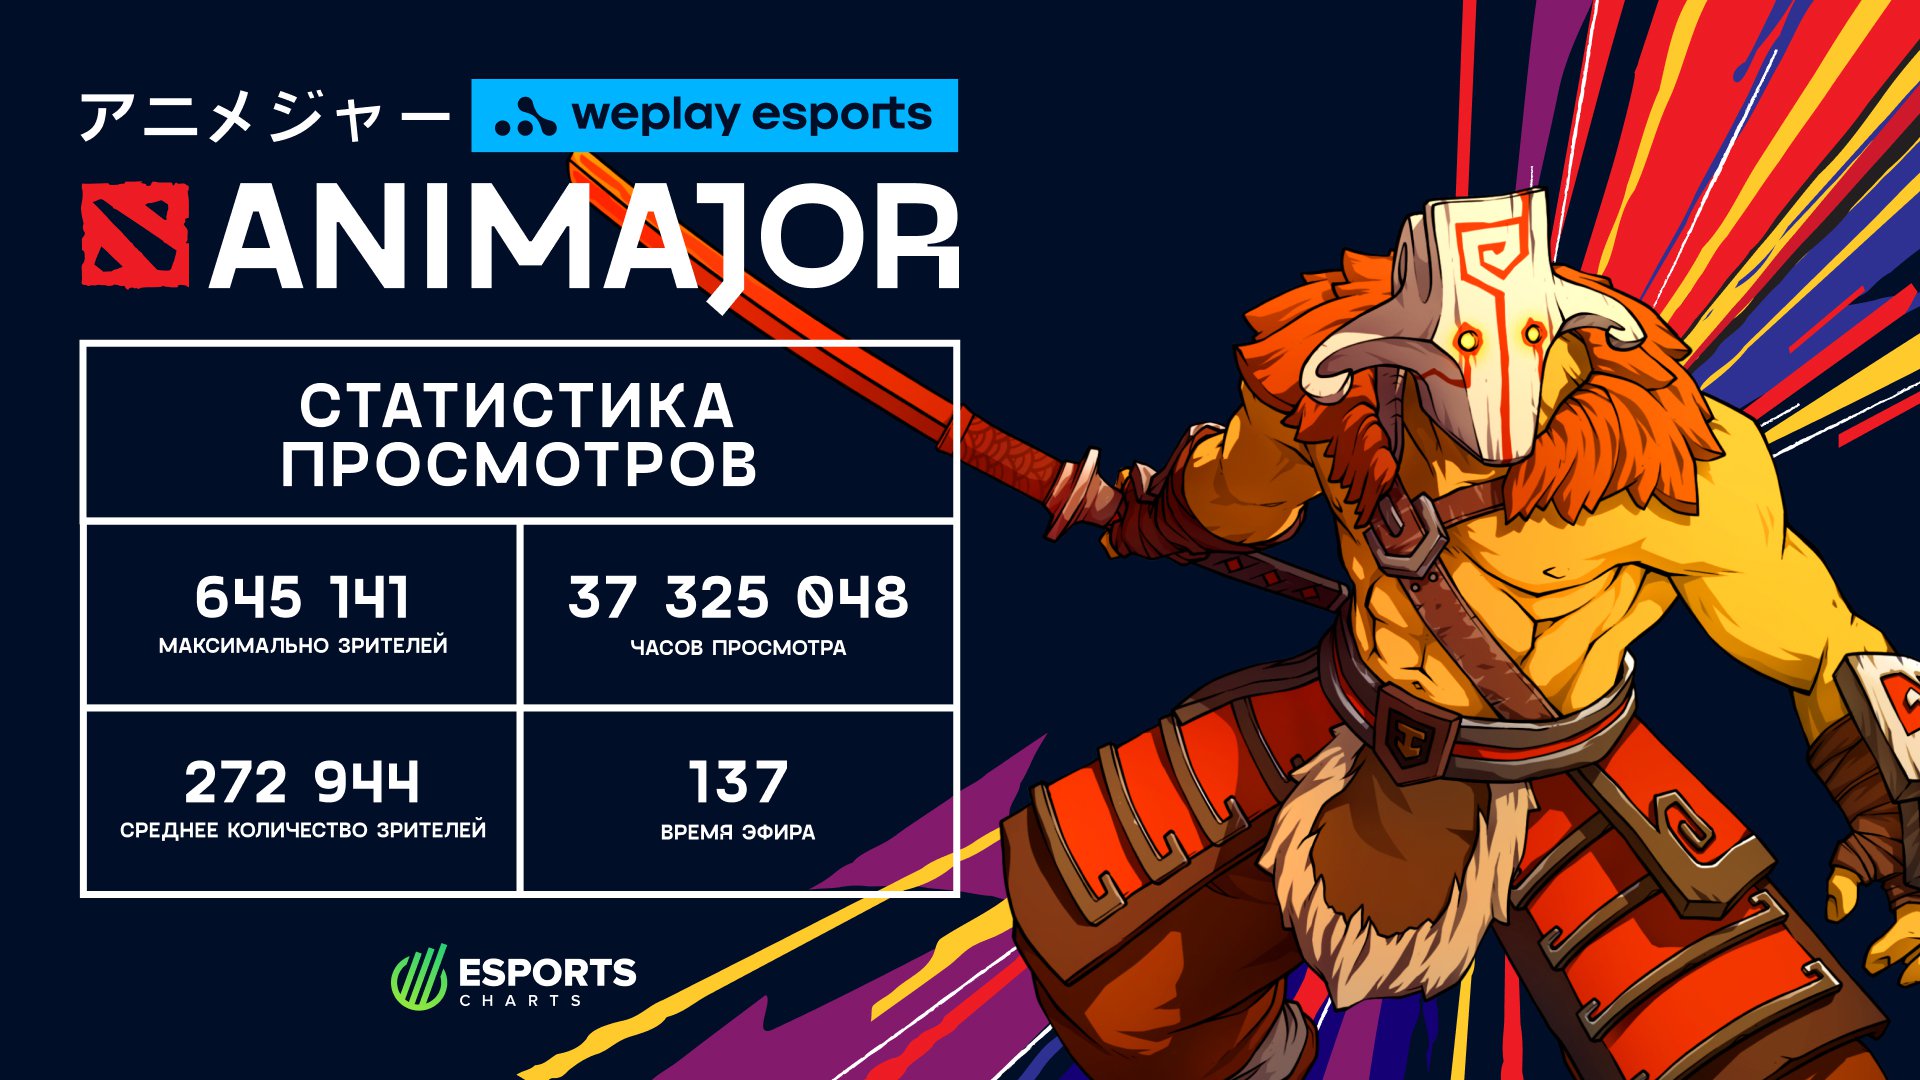 Статистика просмотров WePlay AniMajor. Изображение: WePlay Holding